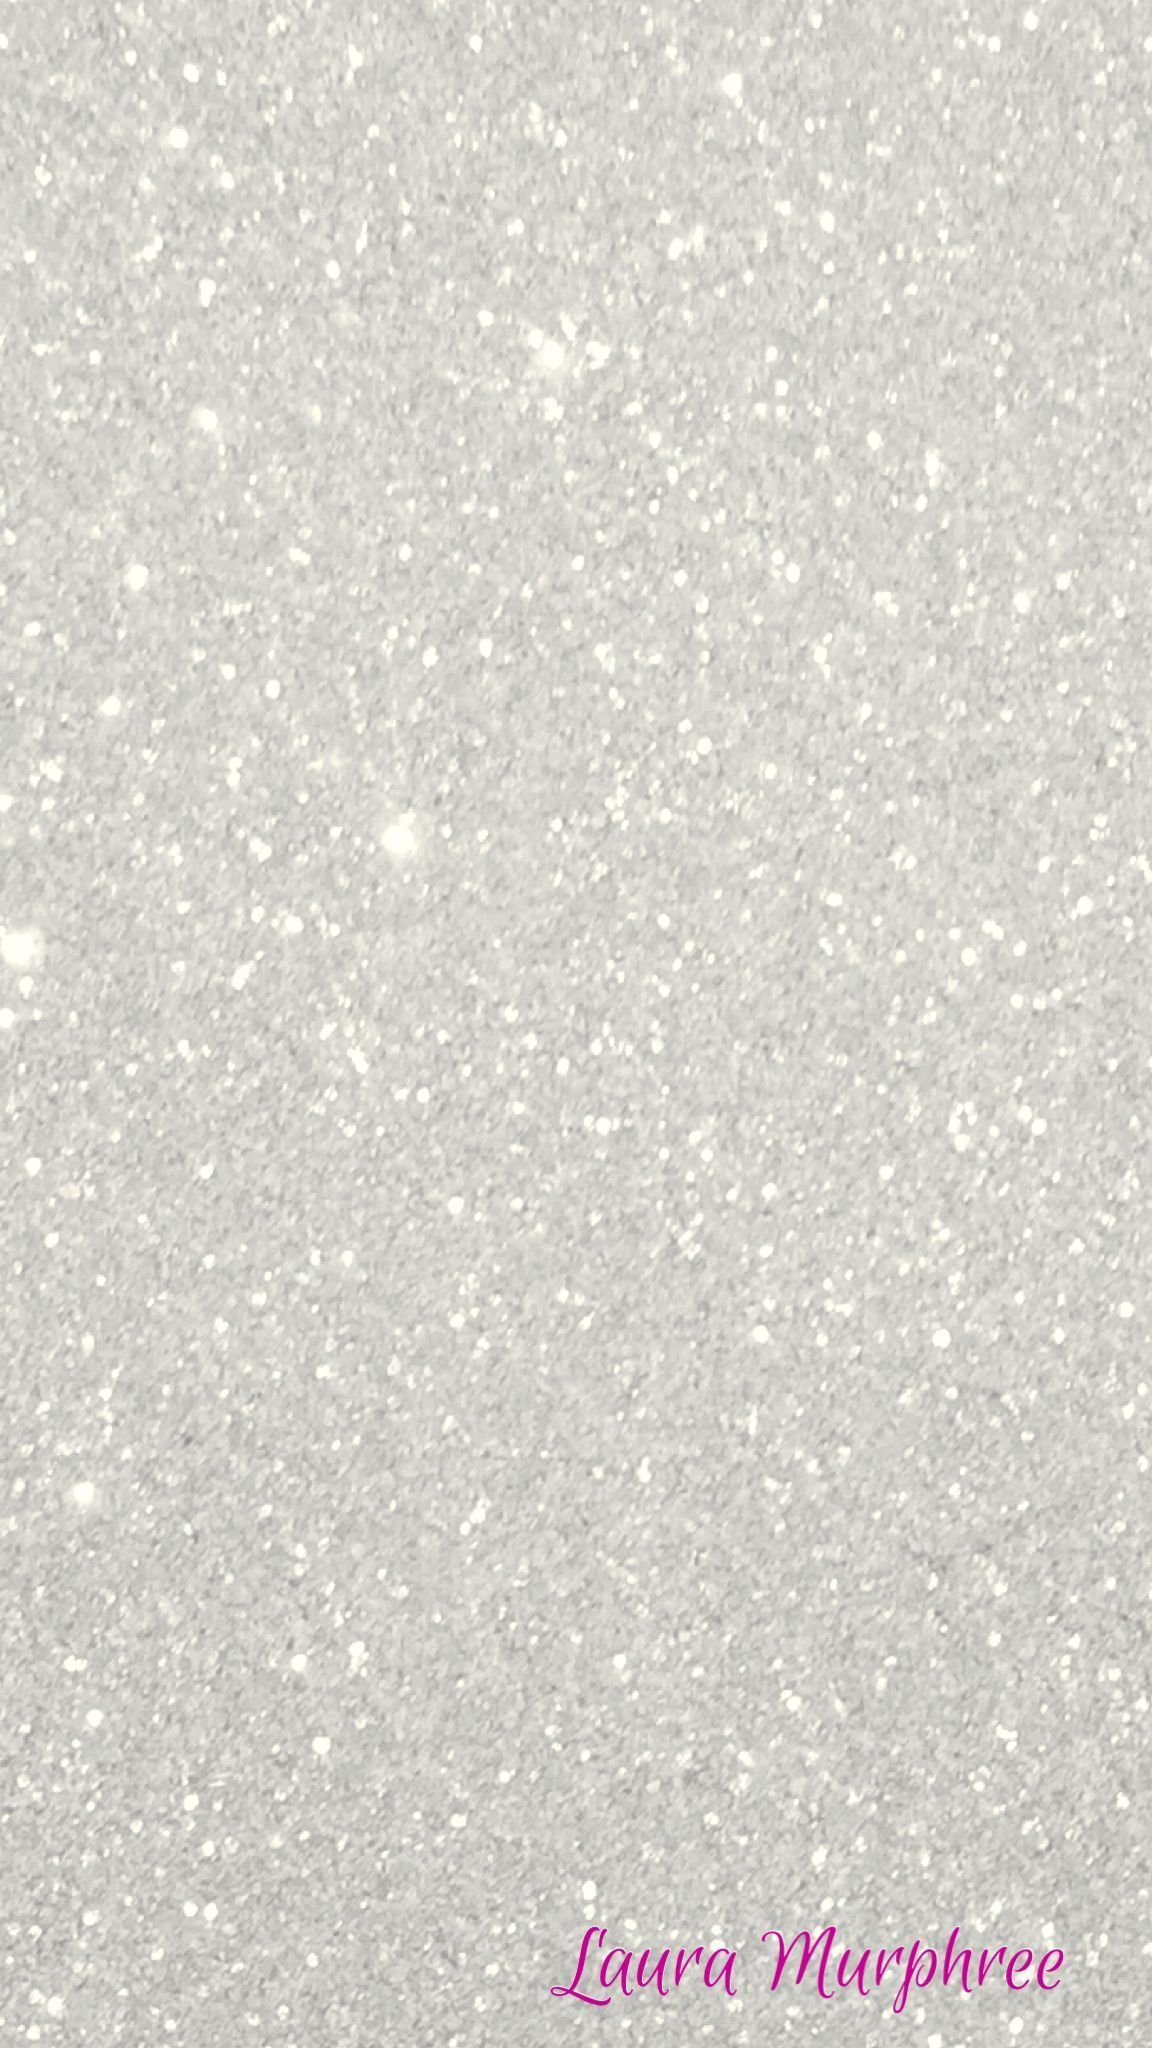 Glitter phone wallpaper sparkle background sparkling glittery girly #GlitterFondos #GlitterB. White glitter background, White glitter wallpaper, Glitter wallpaper